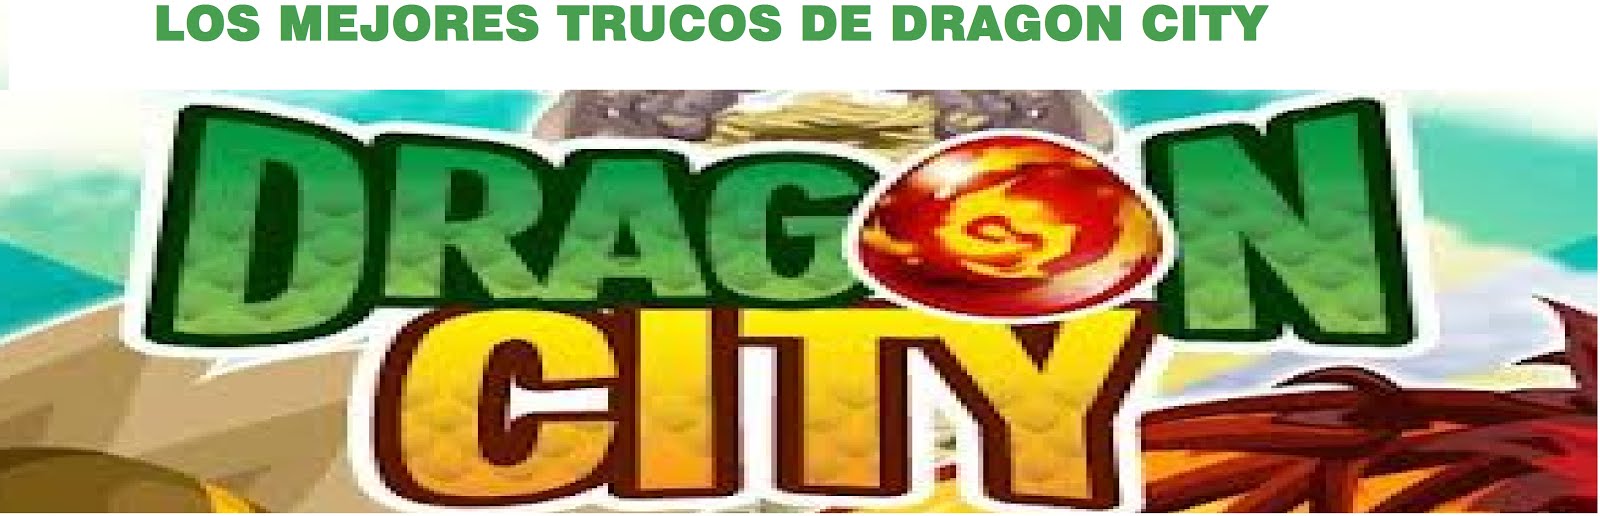 TRUCOS DE DRAGON CITY